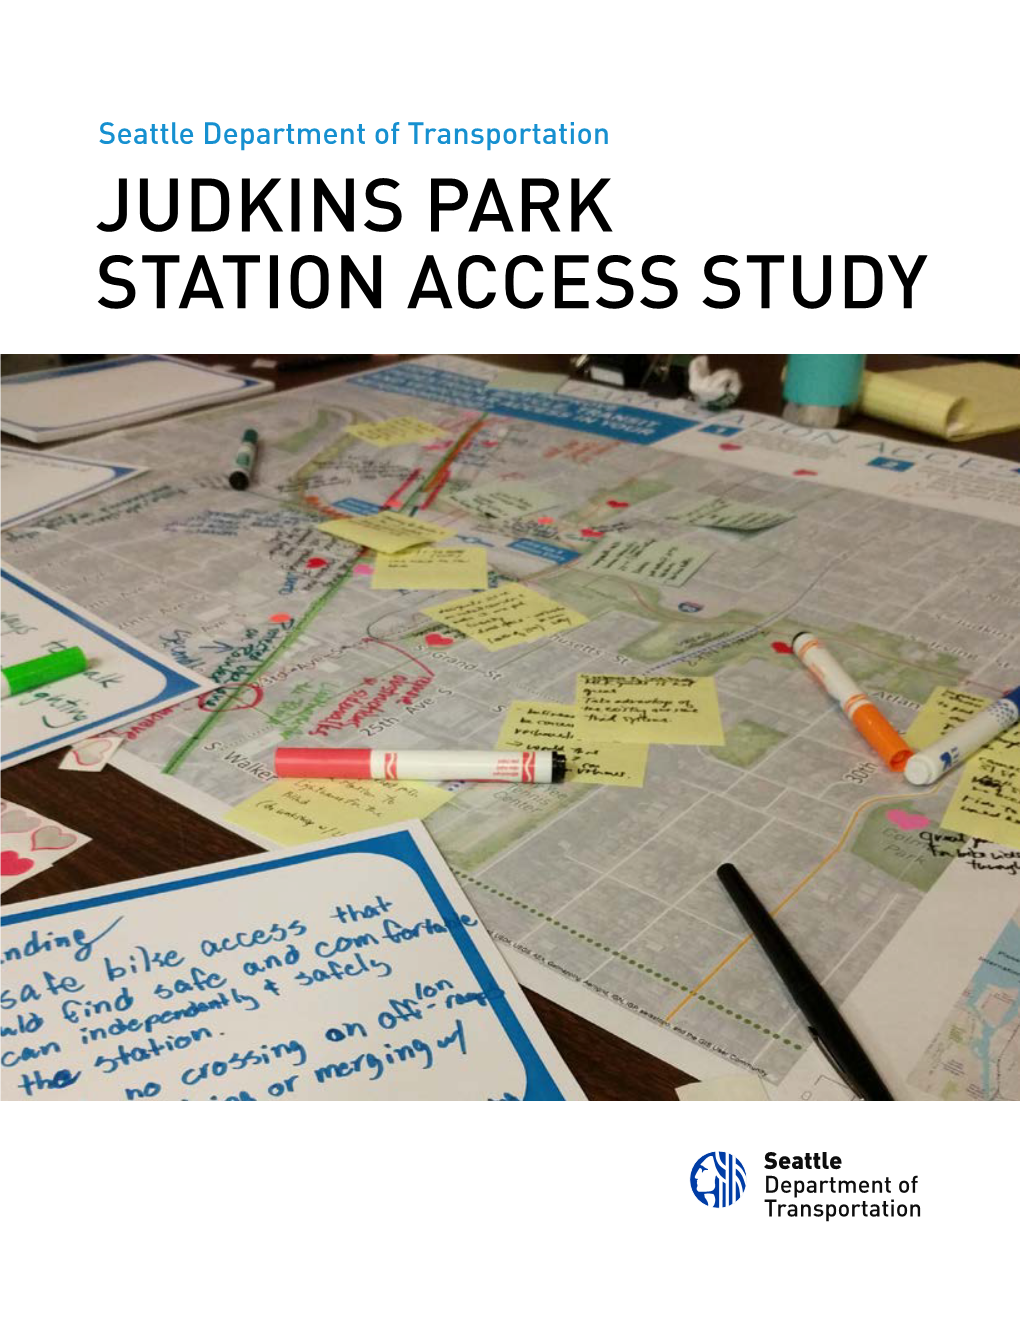 Judkins Park Station Access Study